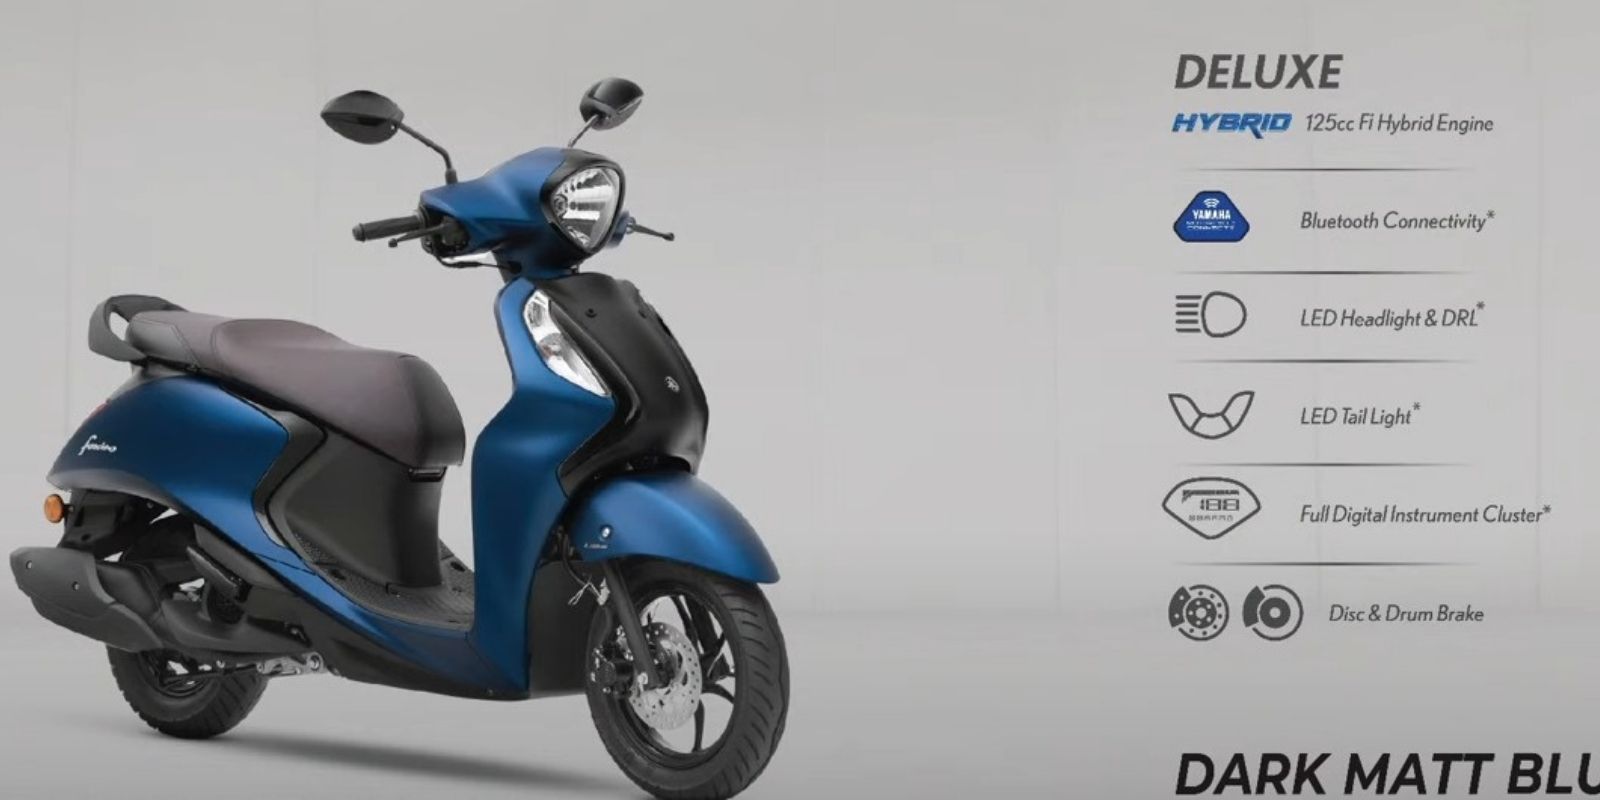 2021 Yamaha Fascino 125 Fi Hybrid With Bluetooth 5